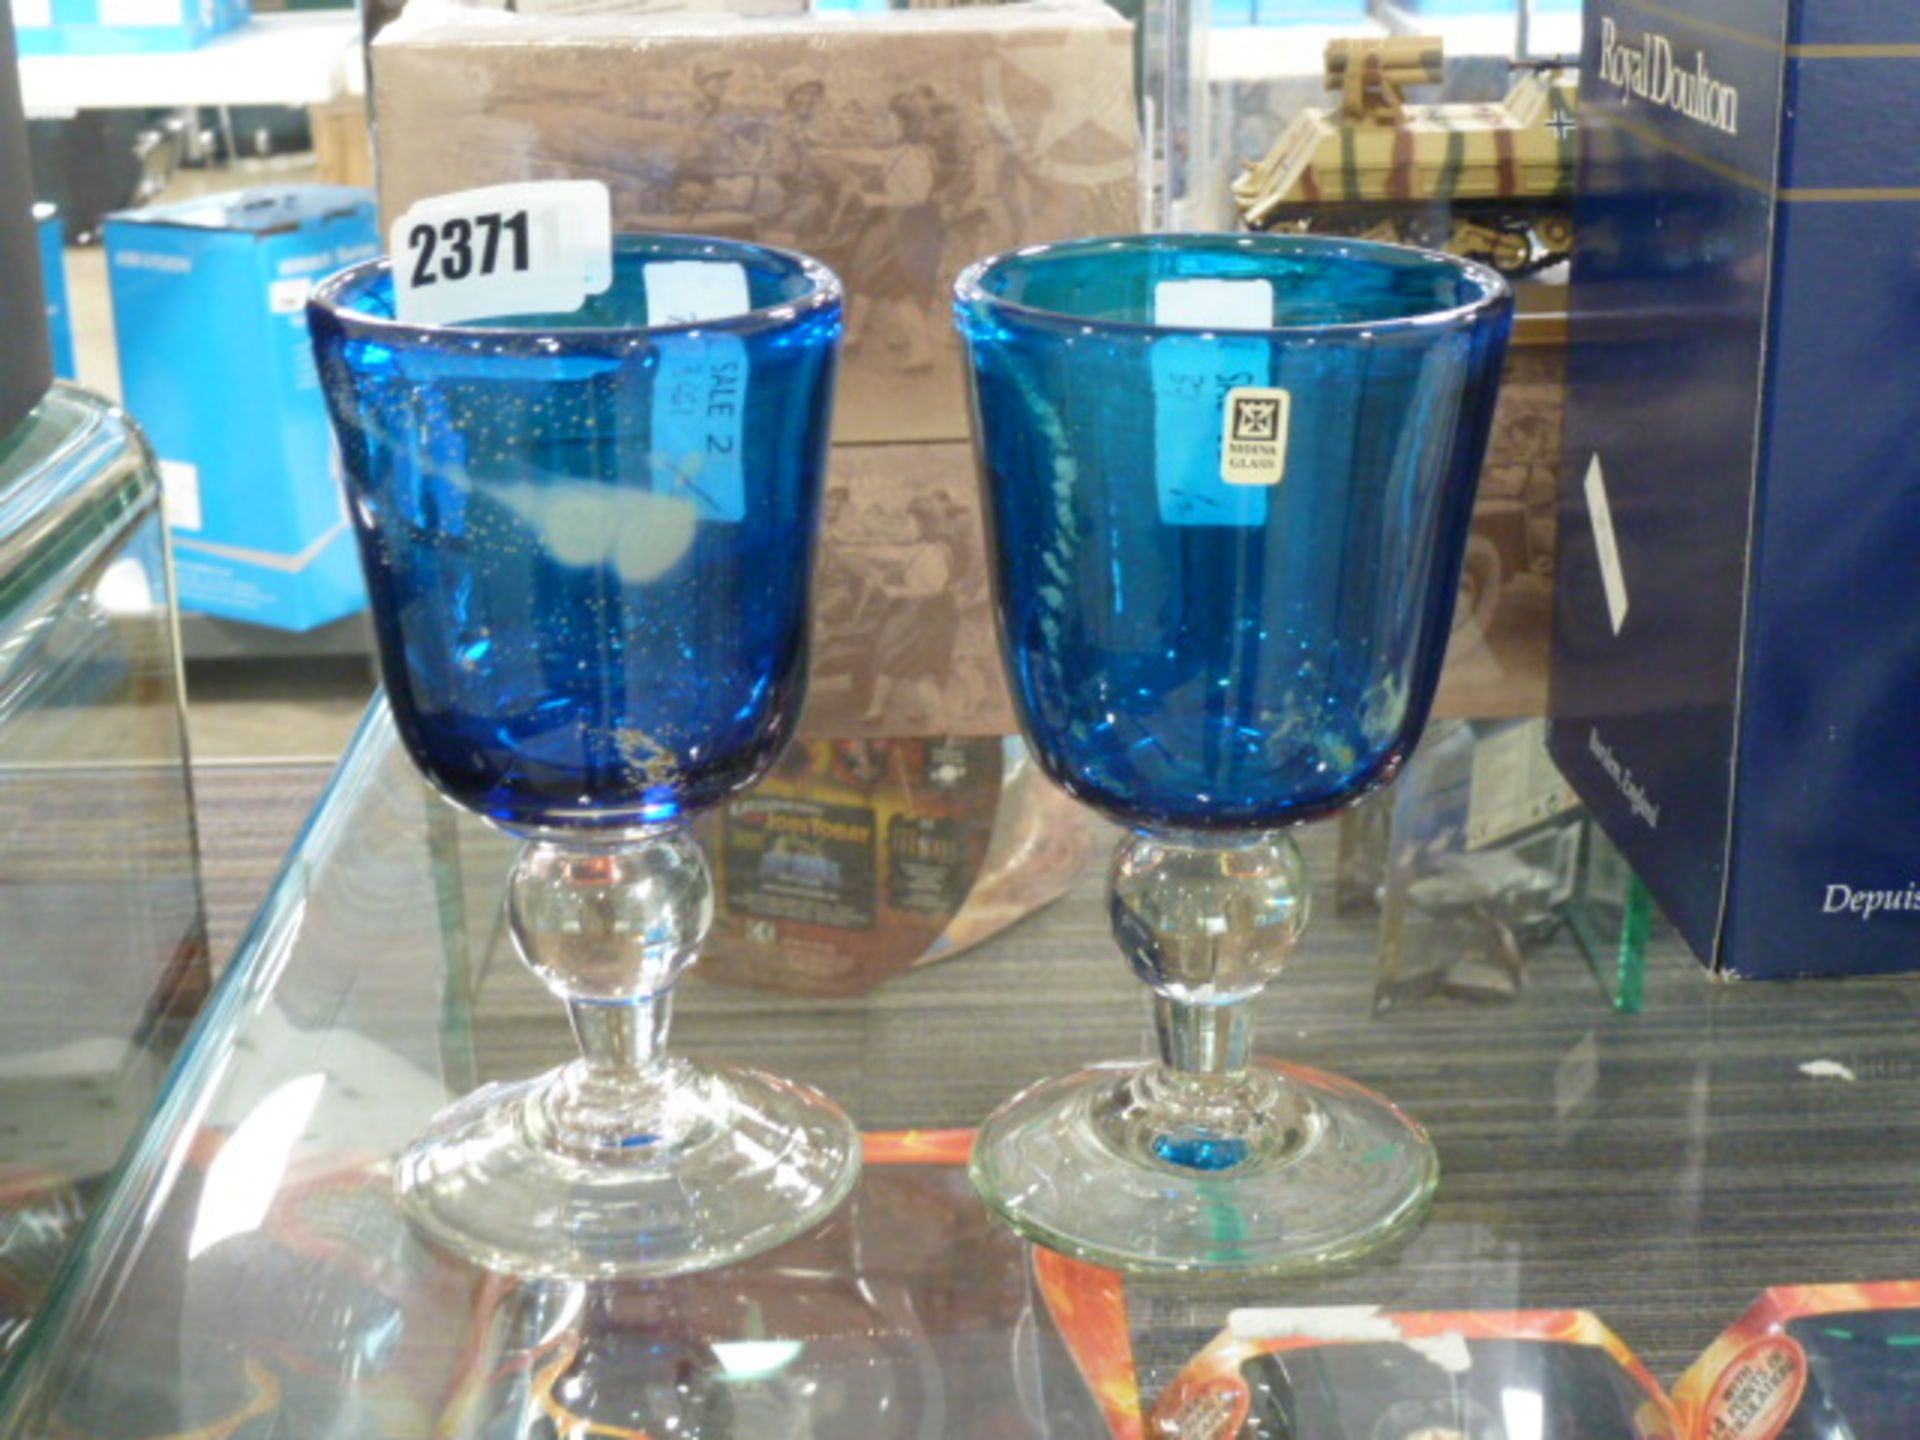 2351 2 blue glass Madina glasses